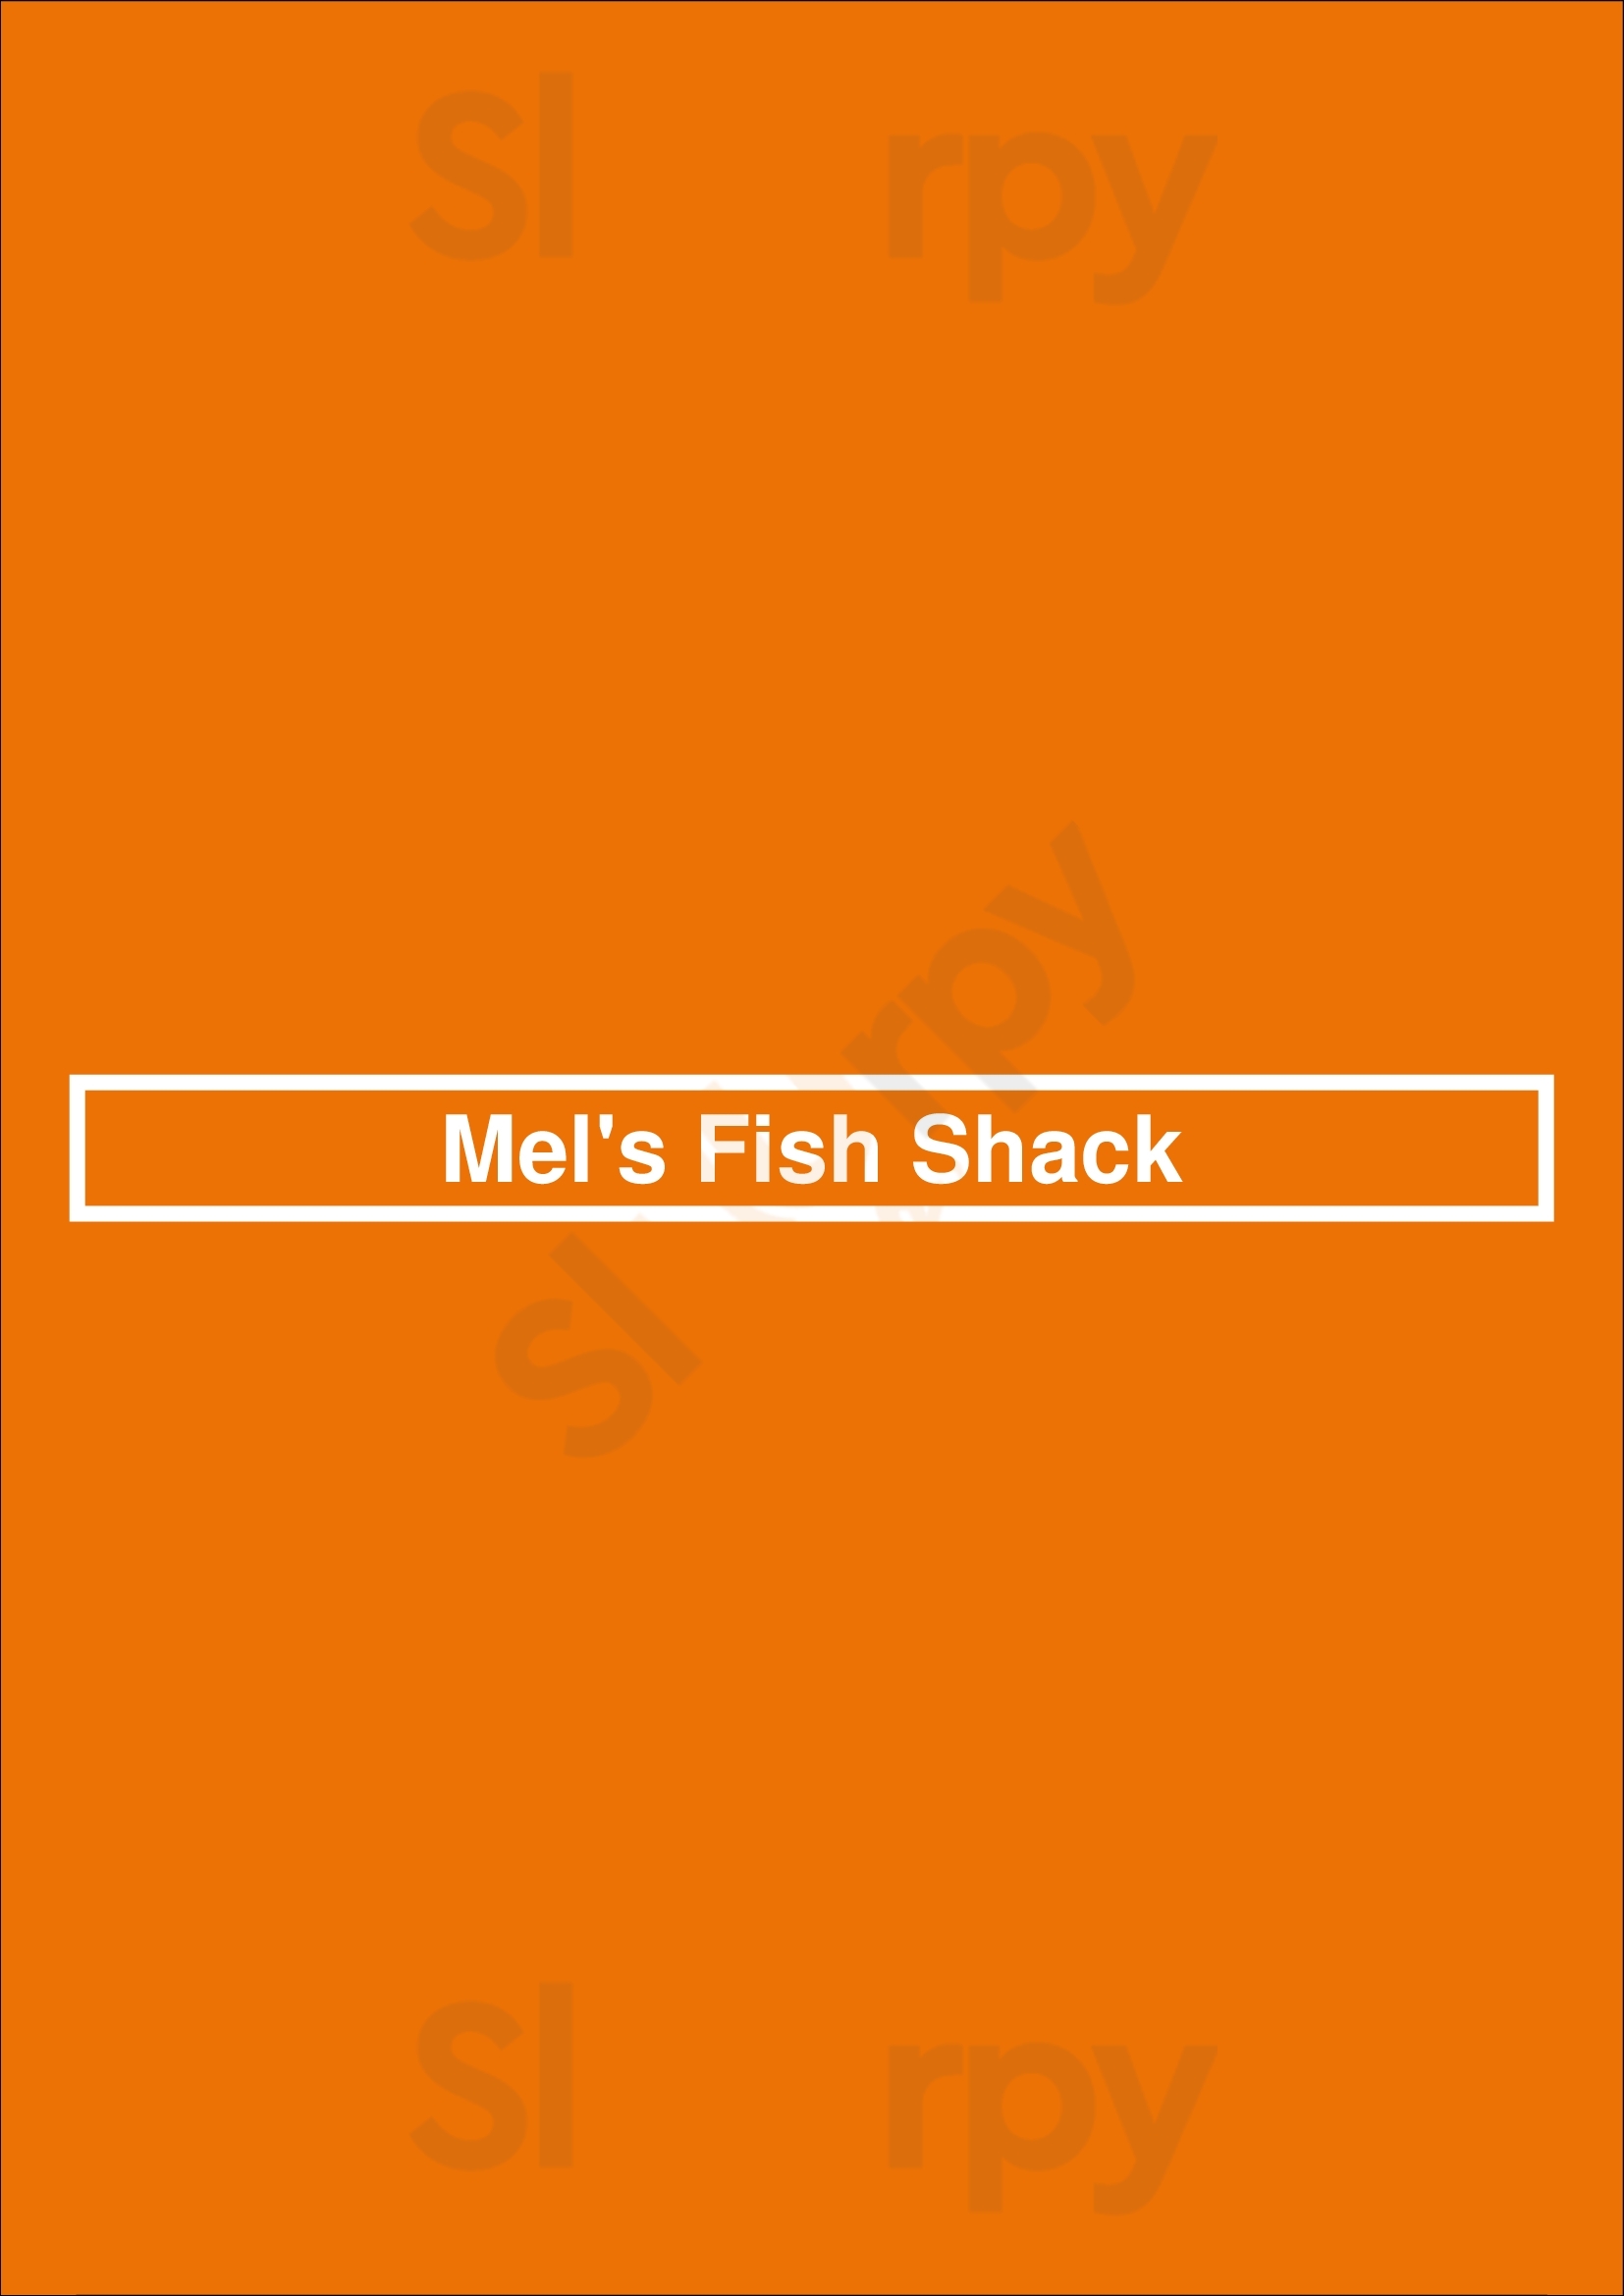 Mel's Fish Shack Los Angeles Menu - 1